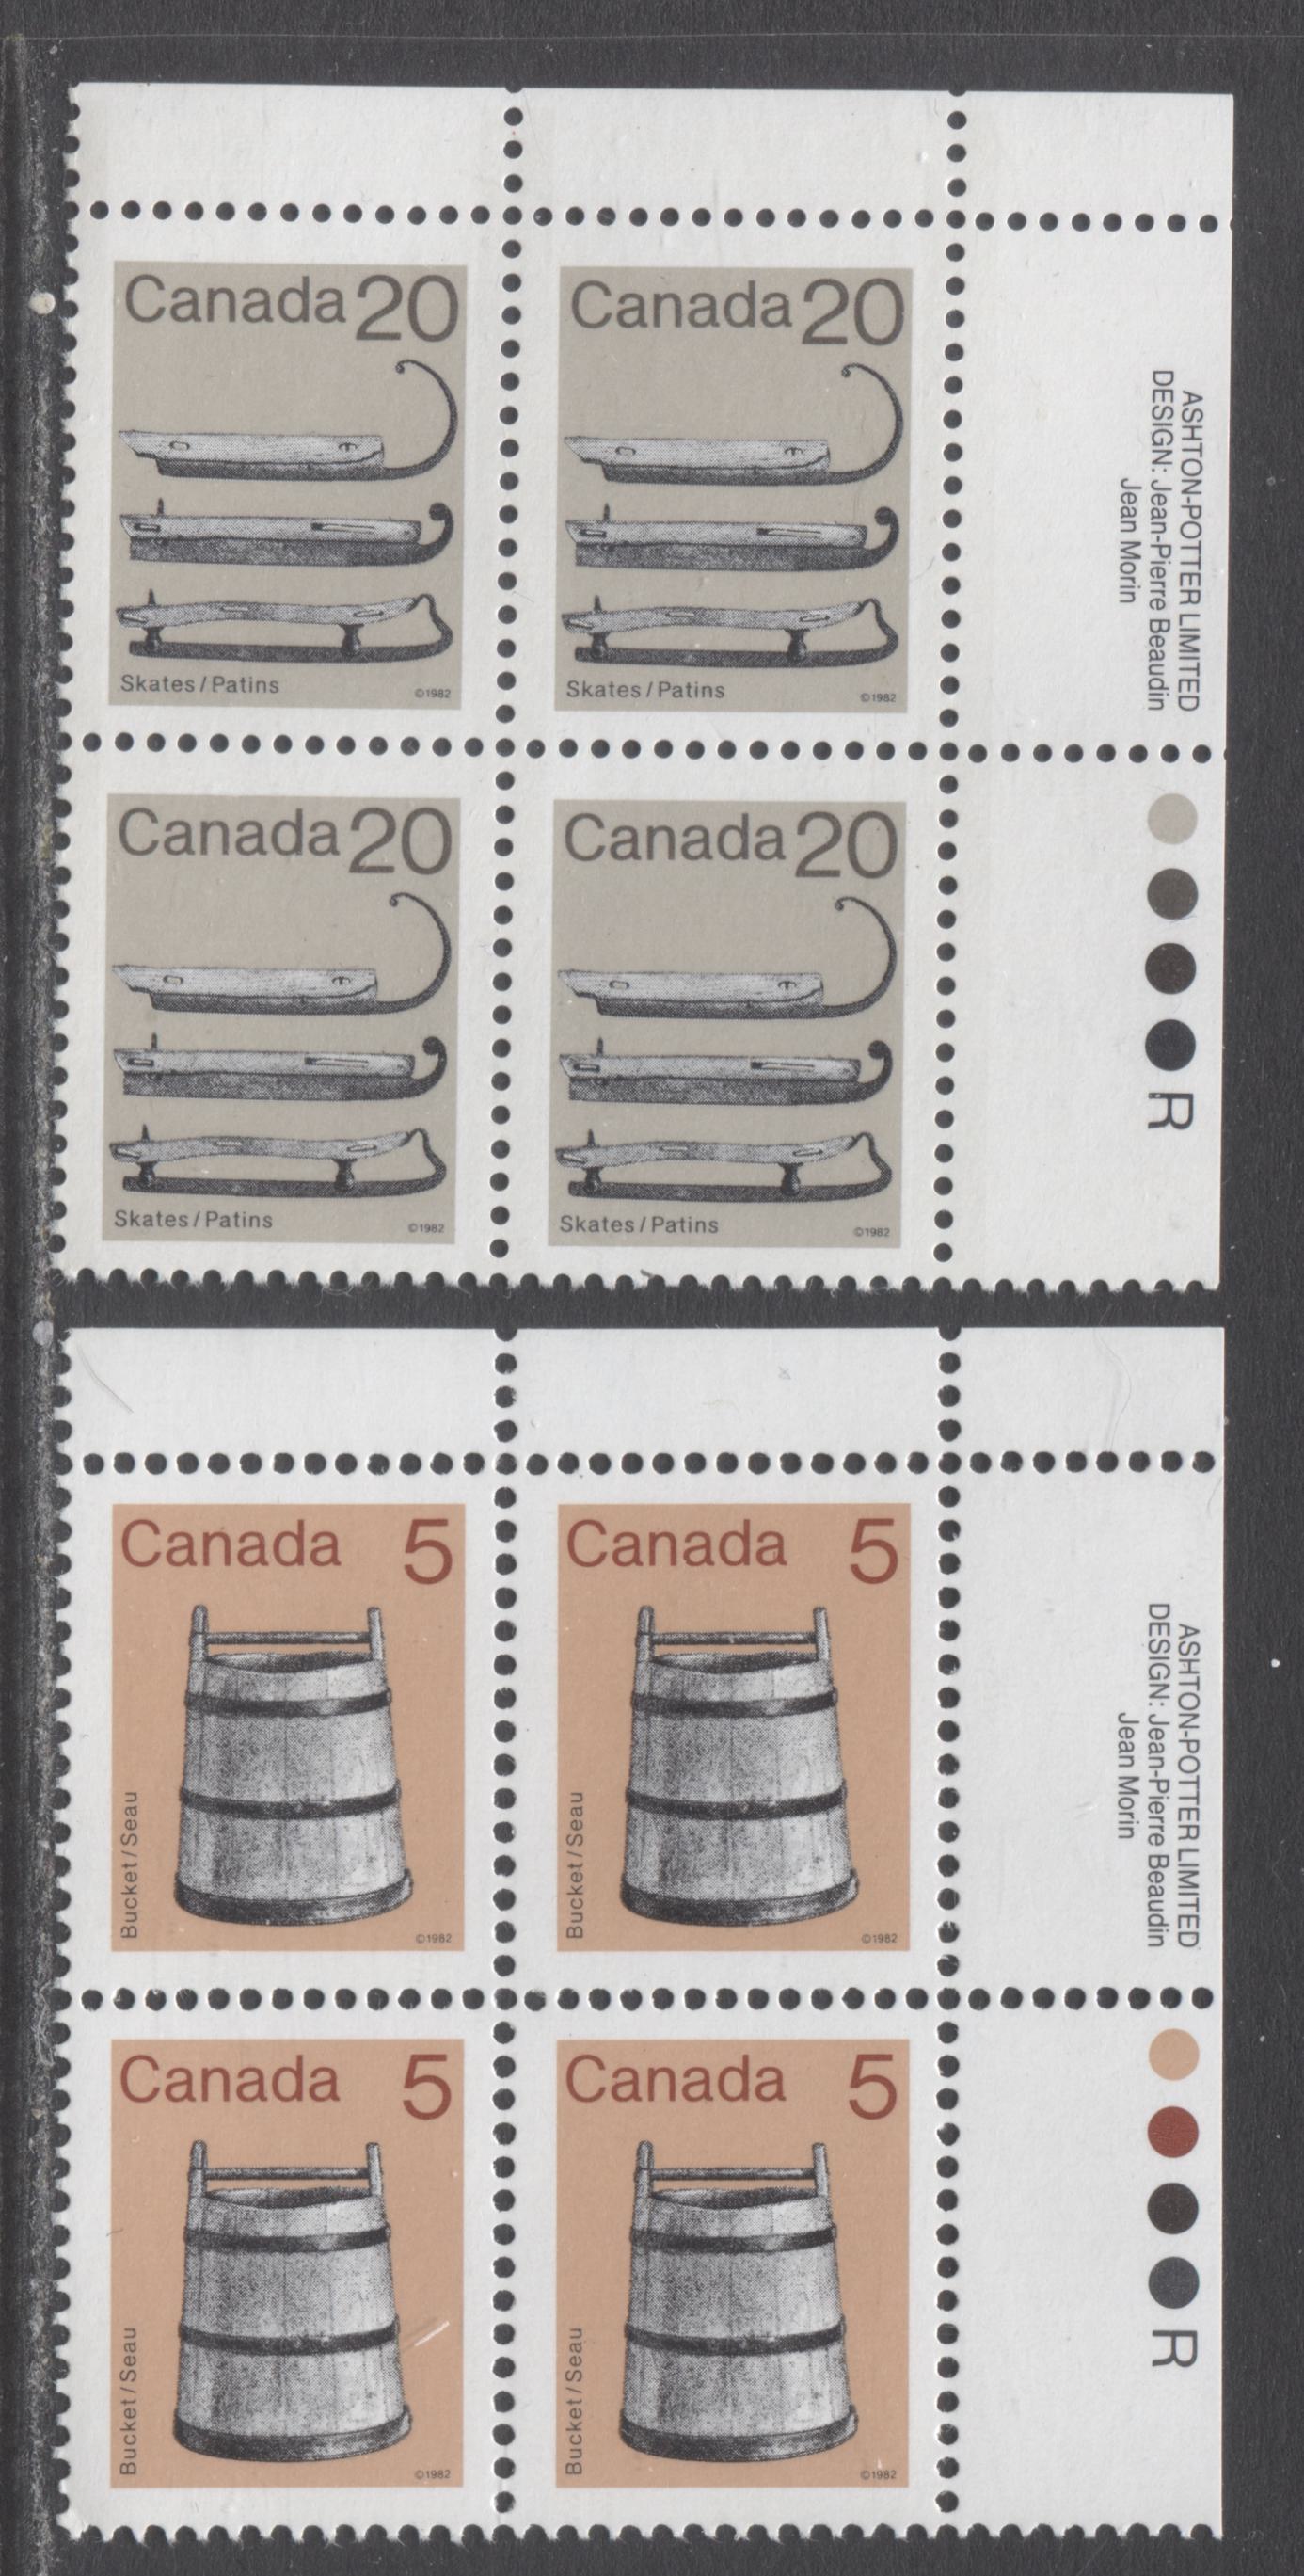 Lot 297 Canada #920ii, 922iii 5c & 20c Flesh/Gray Brown & Multicolored Bucket & Ice Skates, 1982-1897 Low-Value Artifact Definitives, 2 VFNH UR Inscription Blocks Of 4 On LF4/F5-fl Rolland Paper